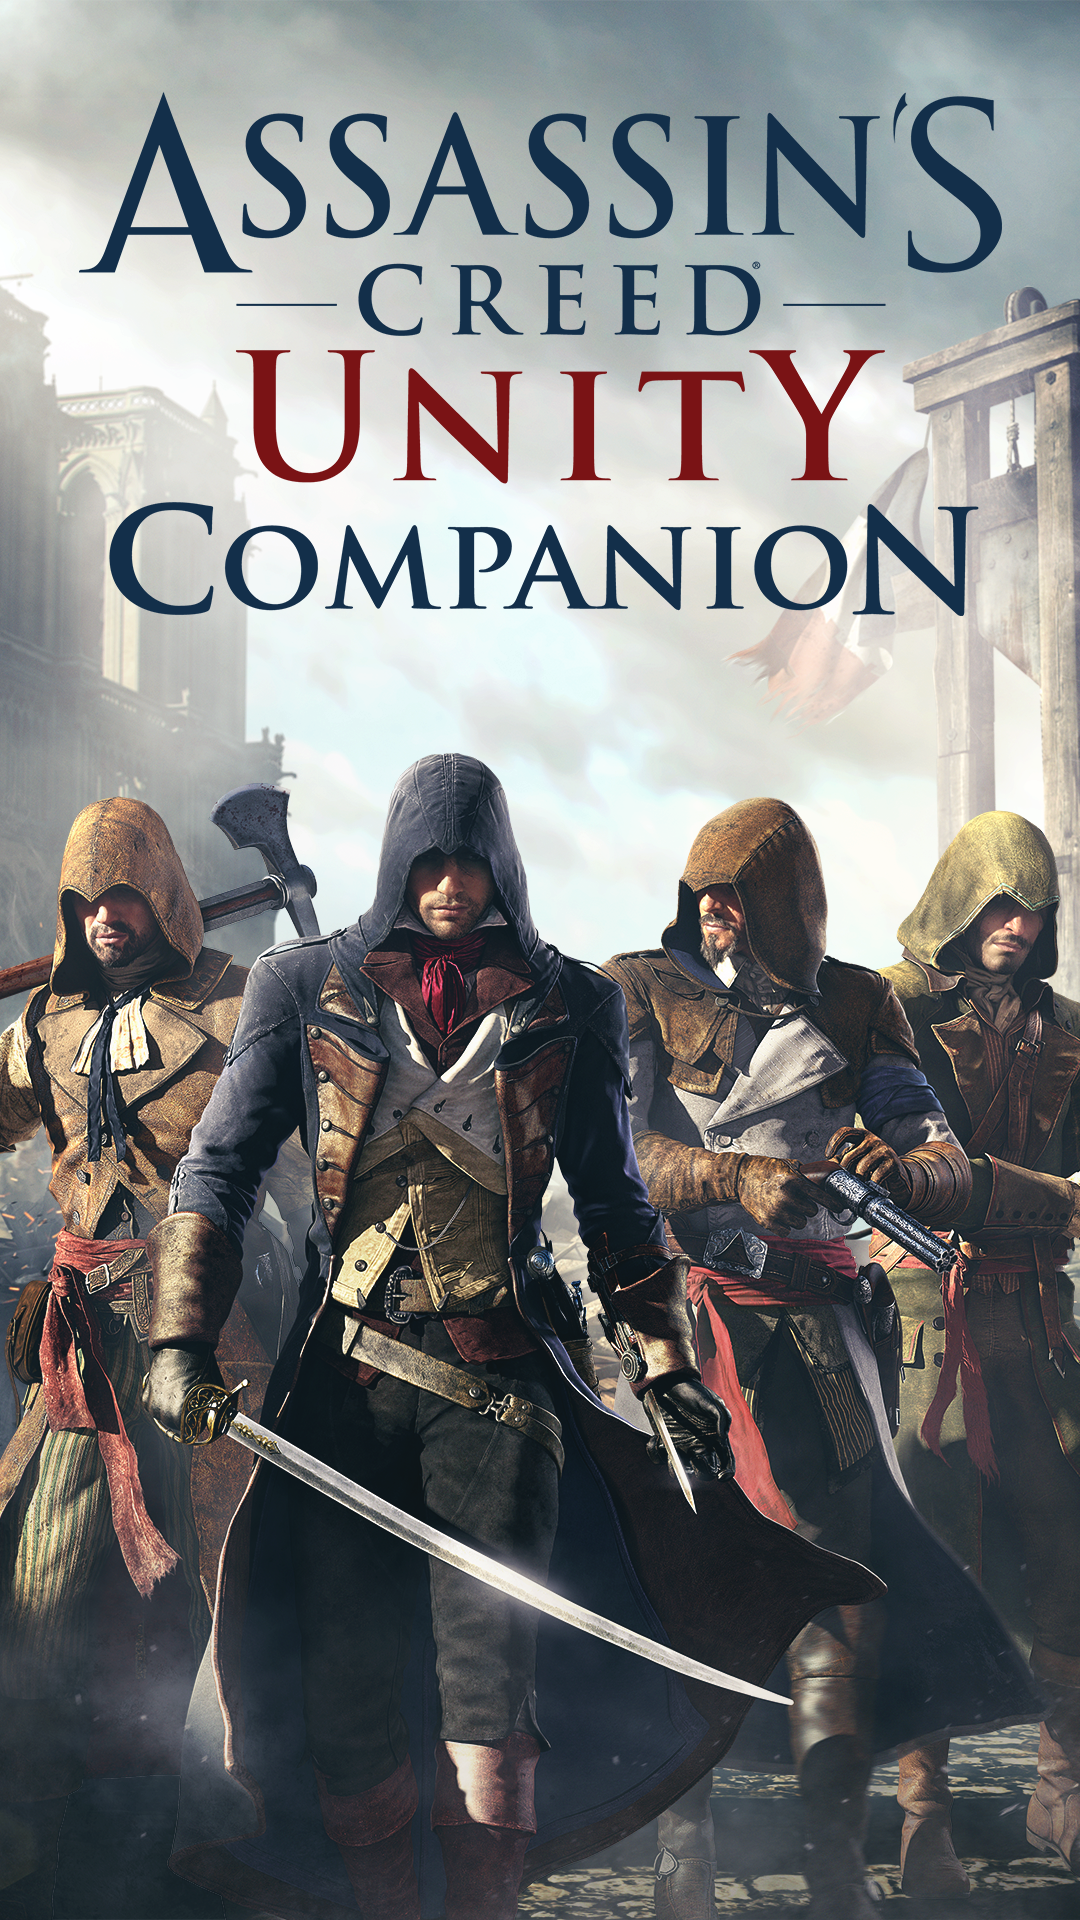 Assassin'S Creed: Unity Companion App | Assassin'S Creed Wiki | Fandom